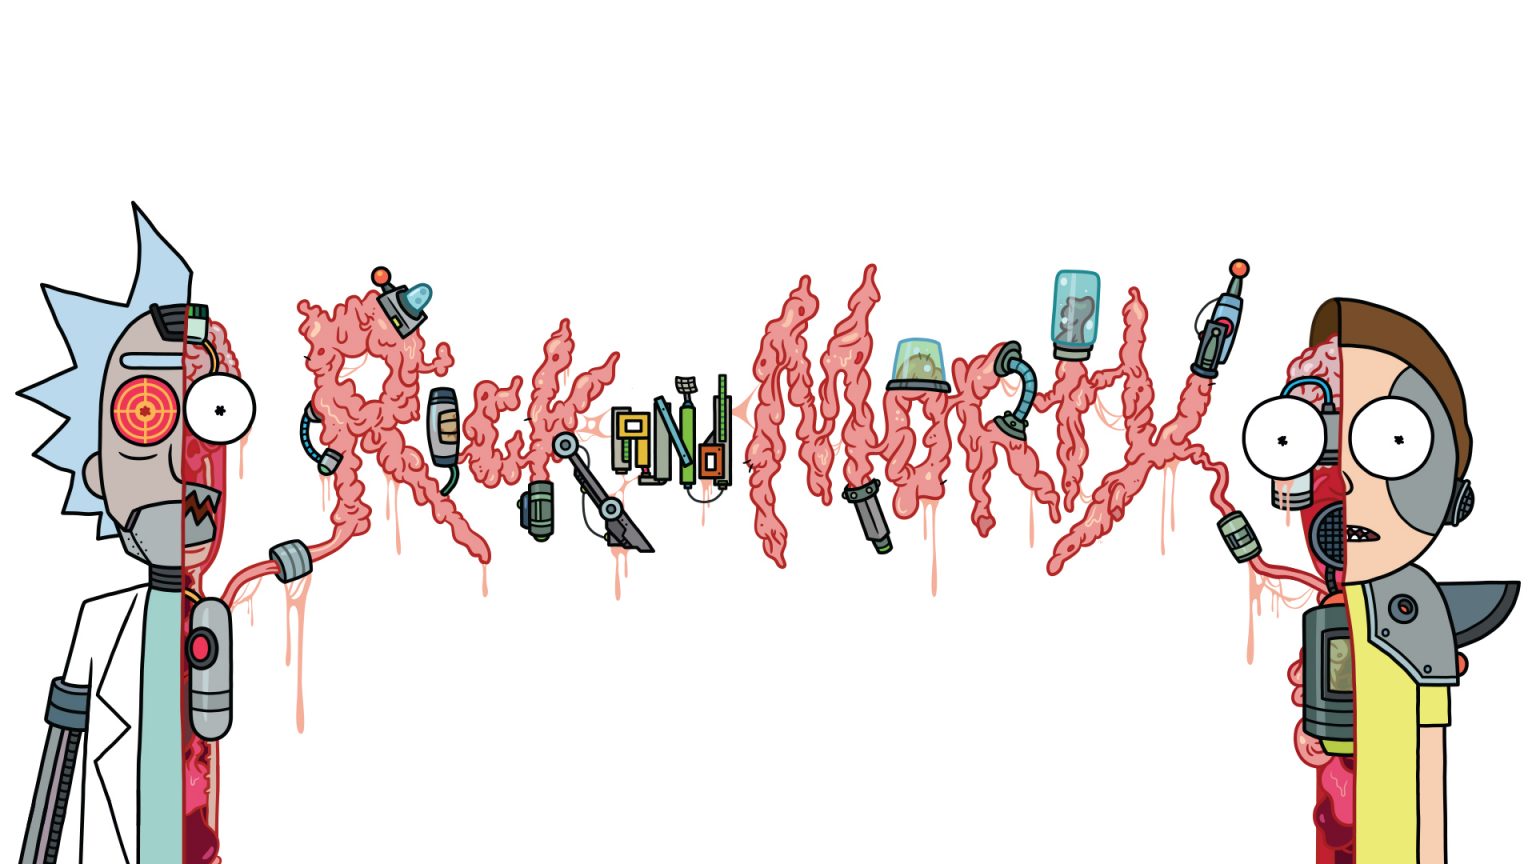 rick and morty season 1 download reddit